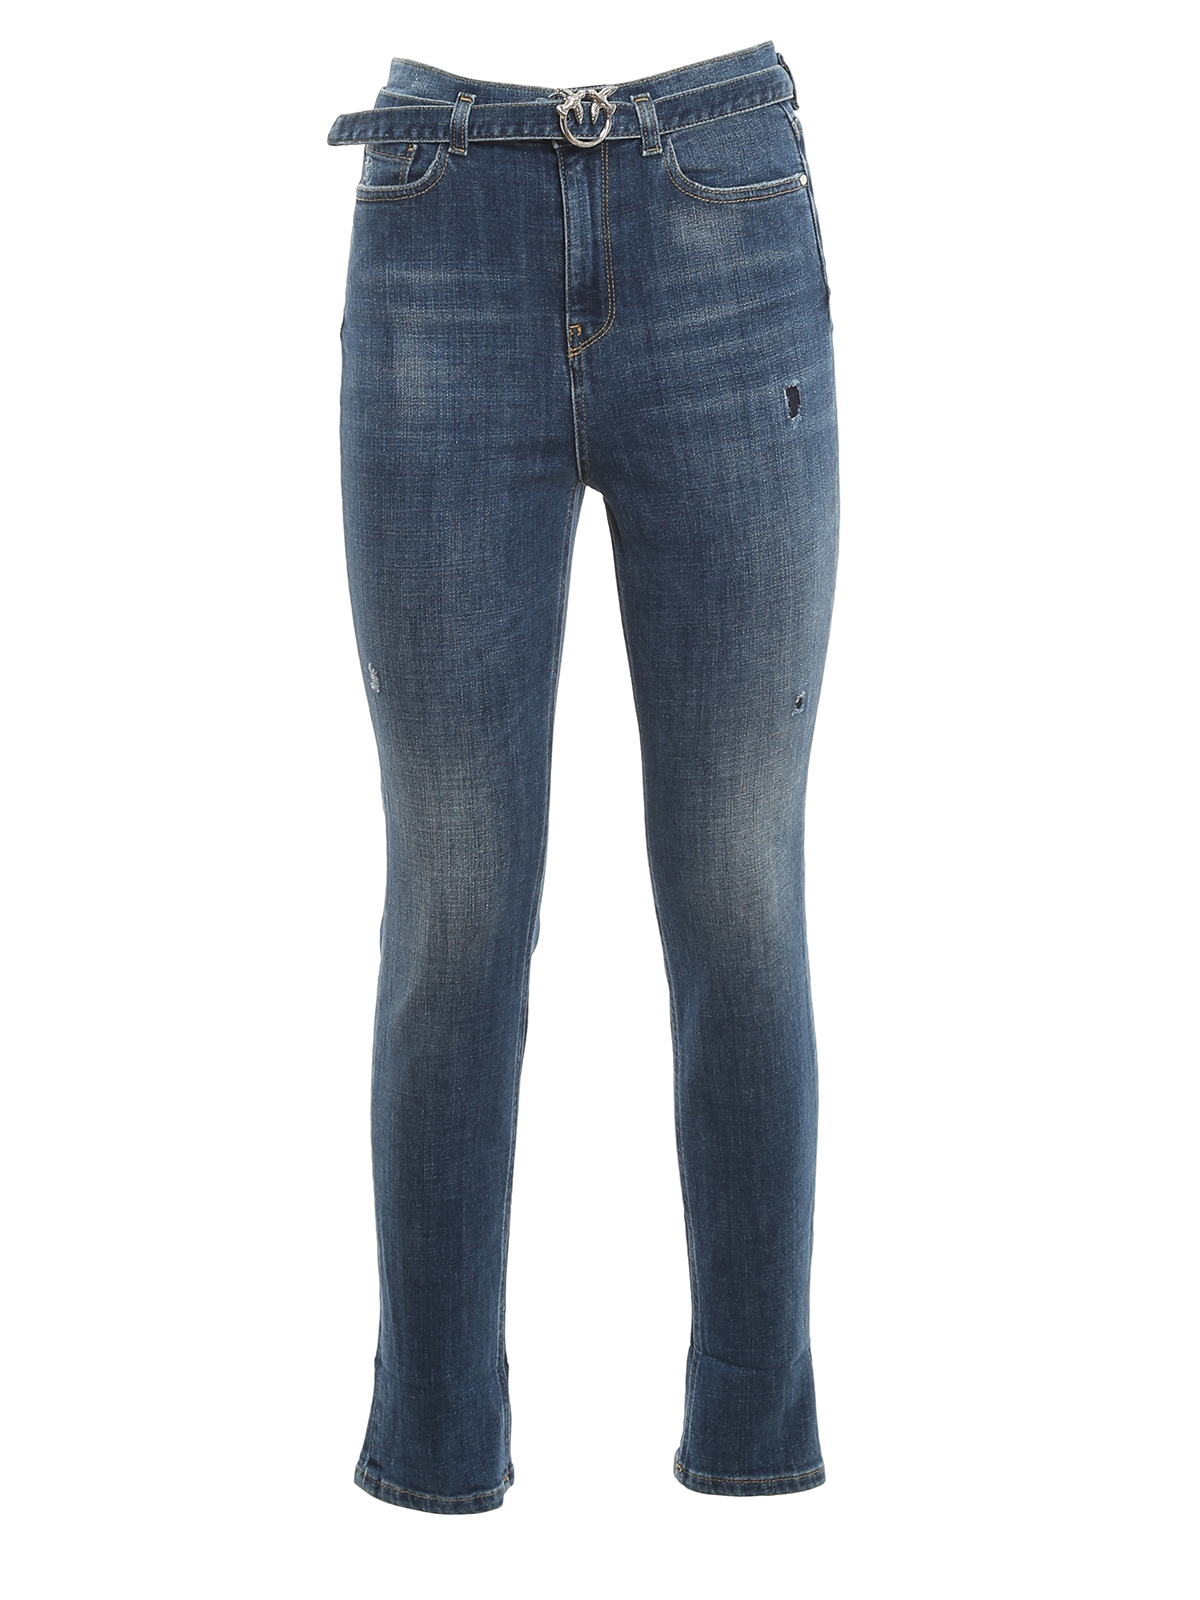 Skinny jeans Pinko - Susan 18 jeans - 1J10P3Y78QF57 | Shop online at iKRIX